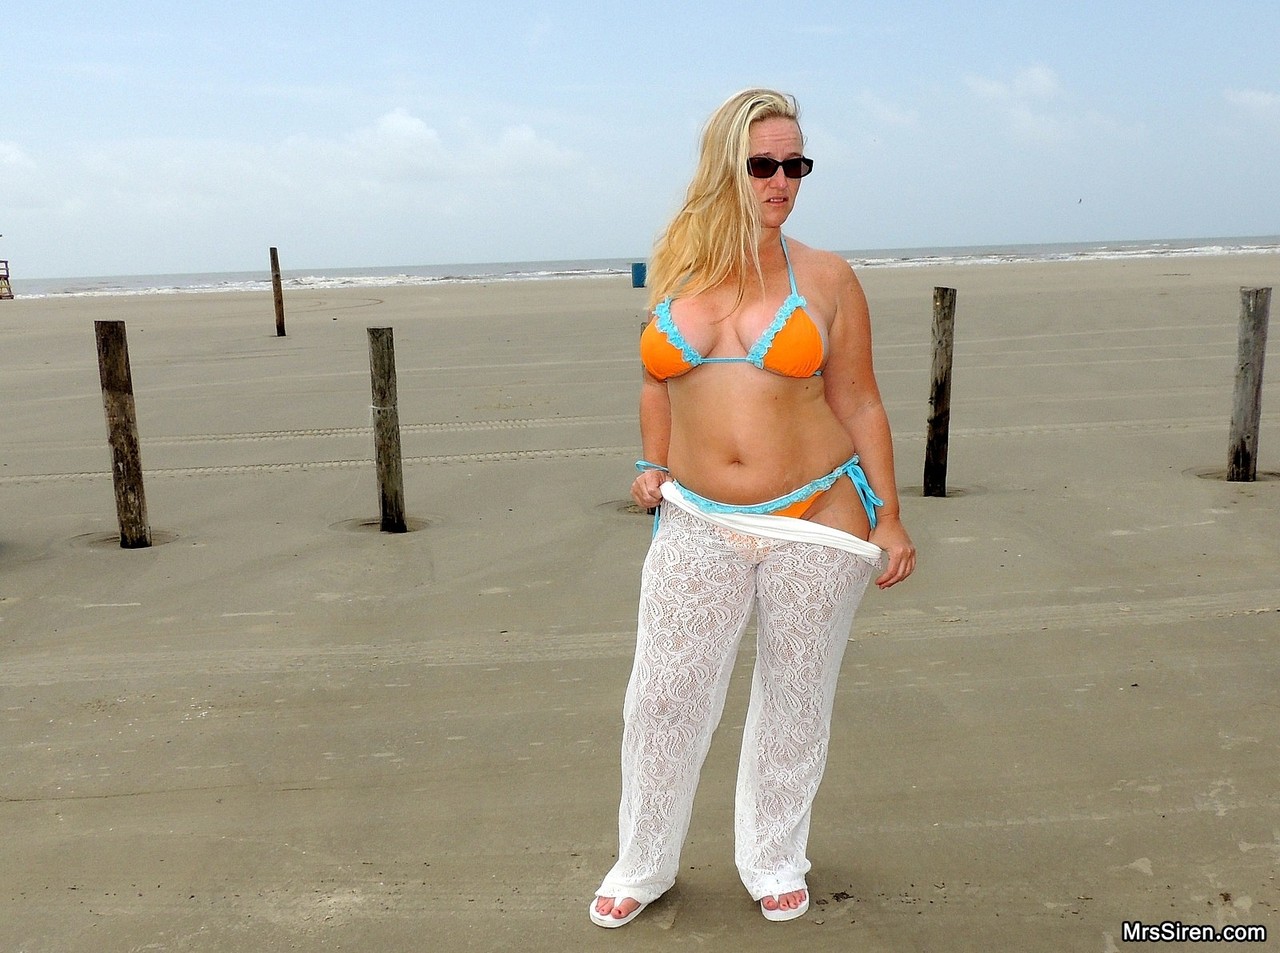 Short MILF Dee Siren strips on the beach & exposes her monster curves 포르노 사진 #425972299 | Mrs Siren Pics, Dee Siren, Chubby, 모바일 포르노